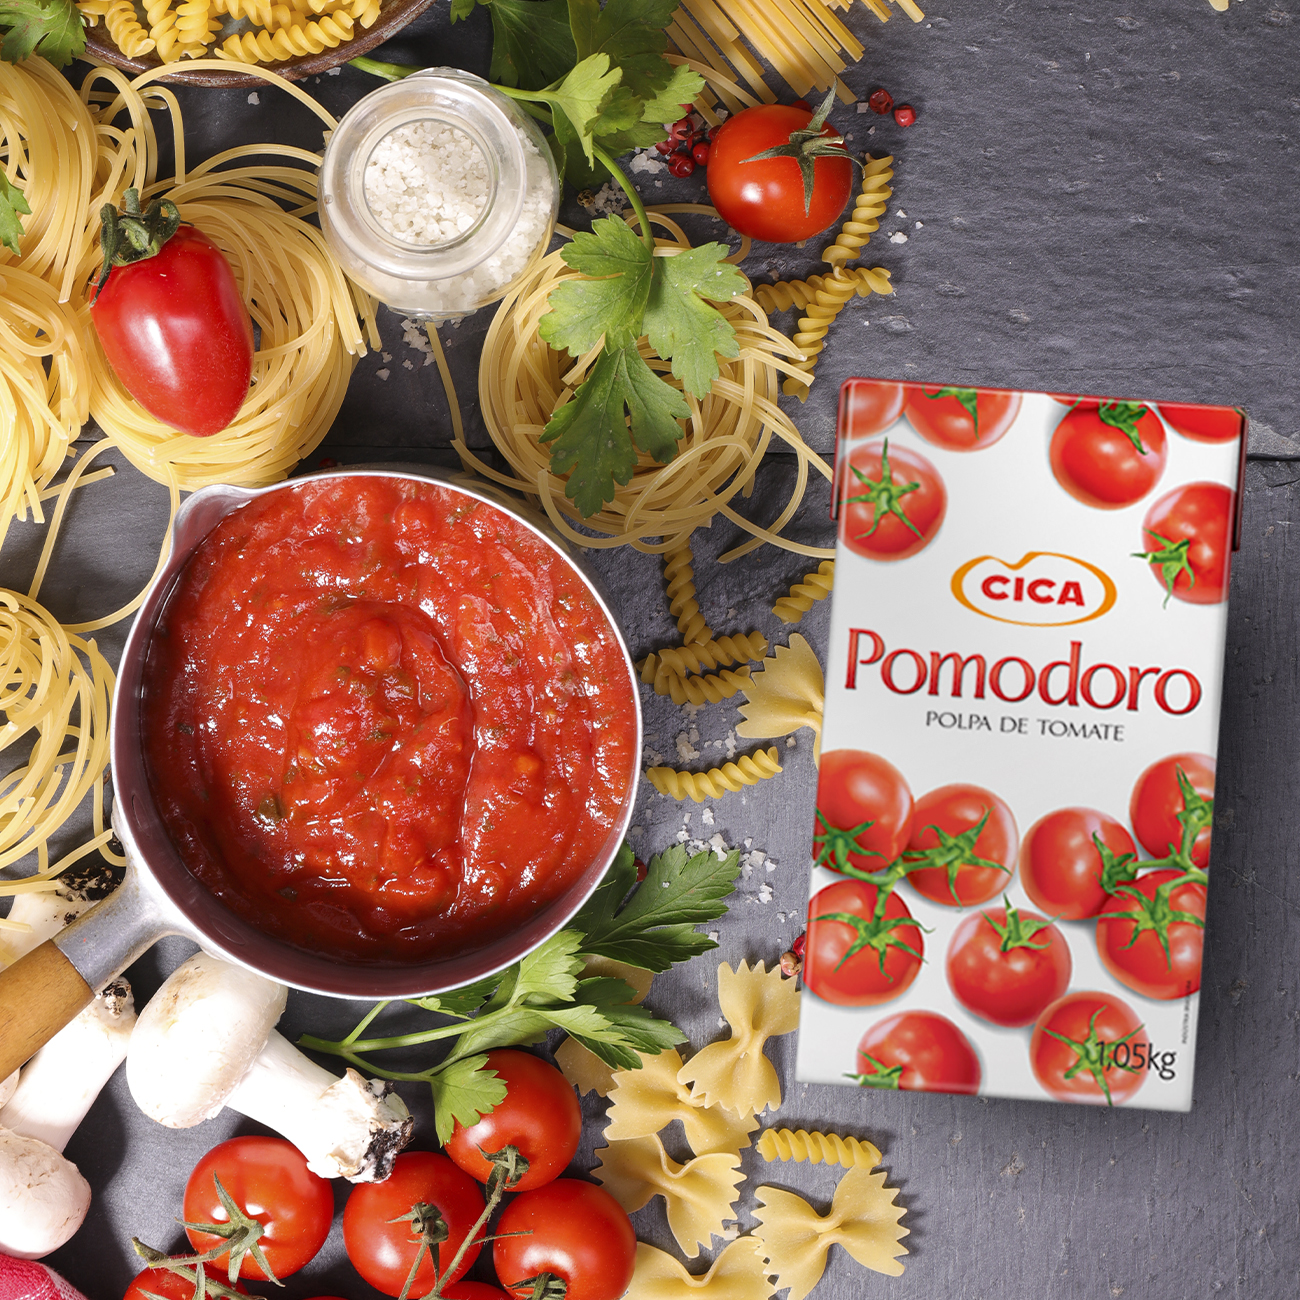 Polpa de Tomate Pomodoro Tradicional Tetra Pak 1,05kg